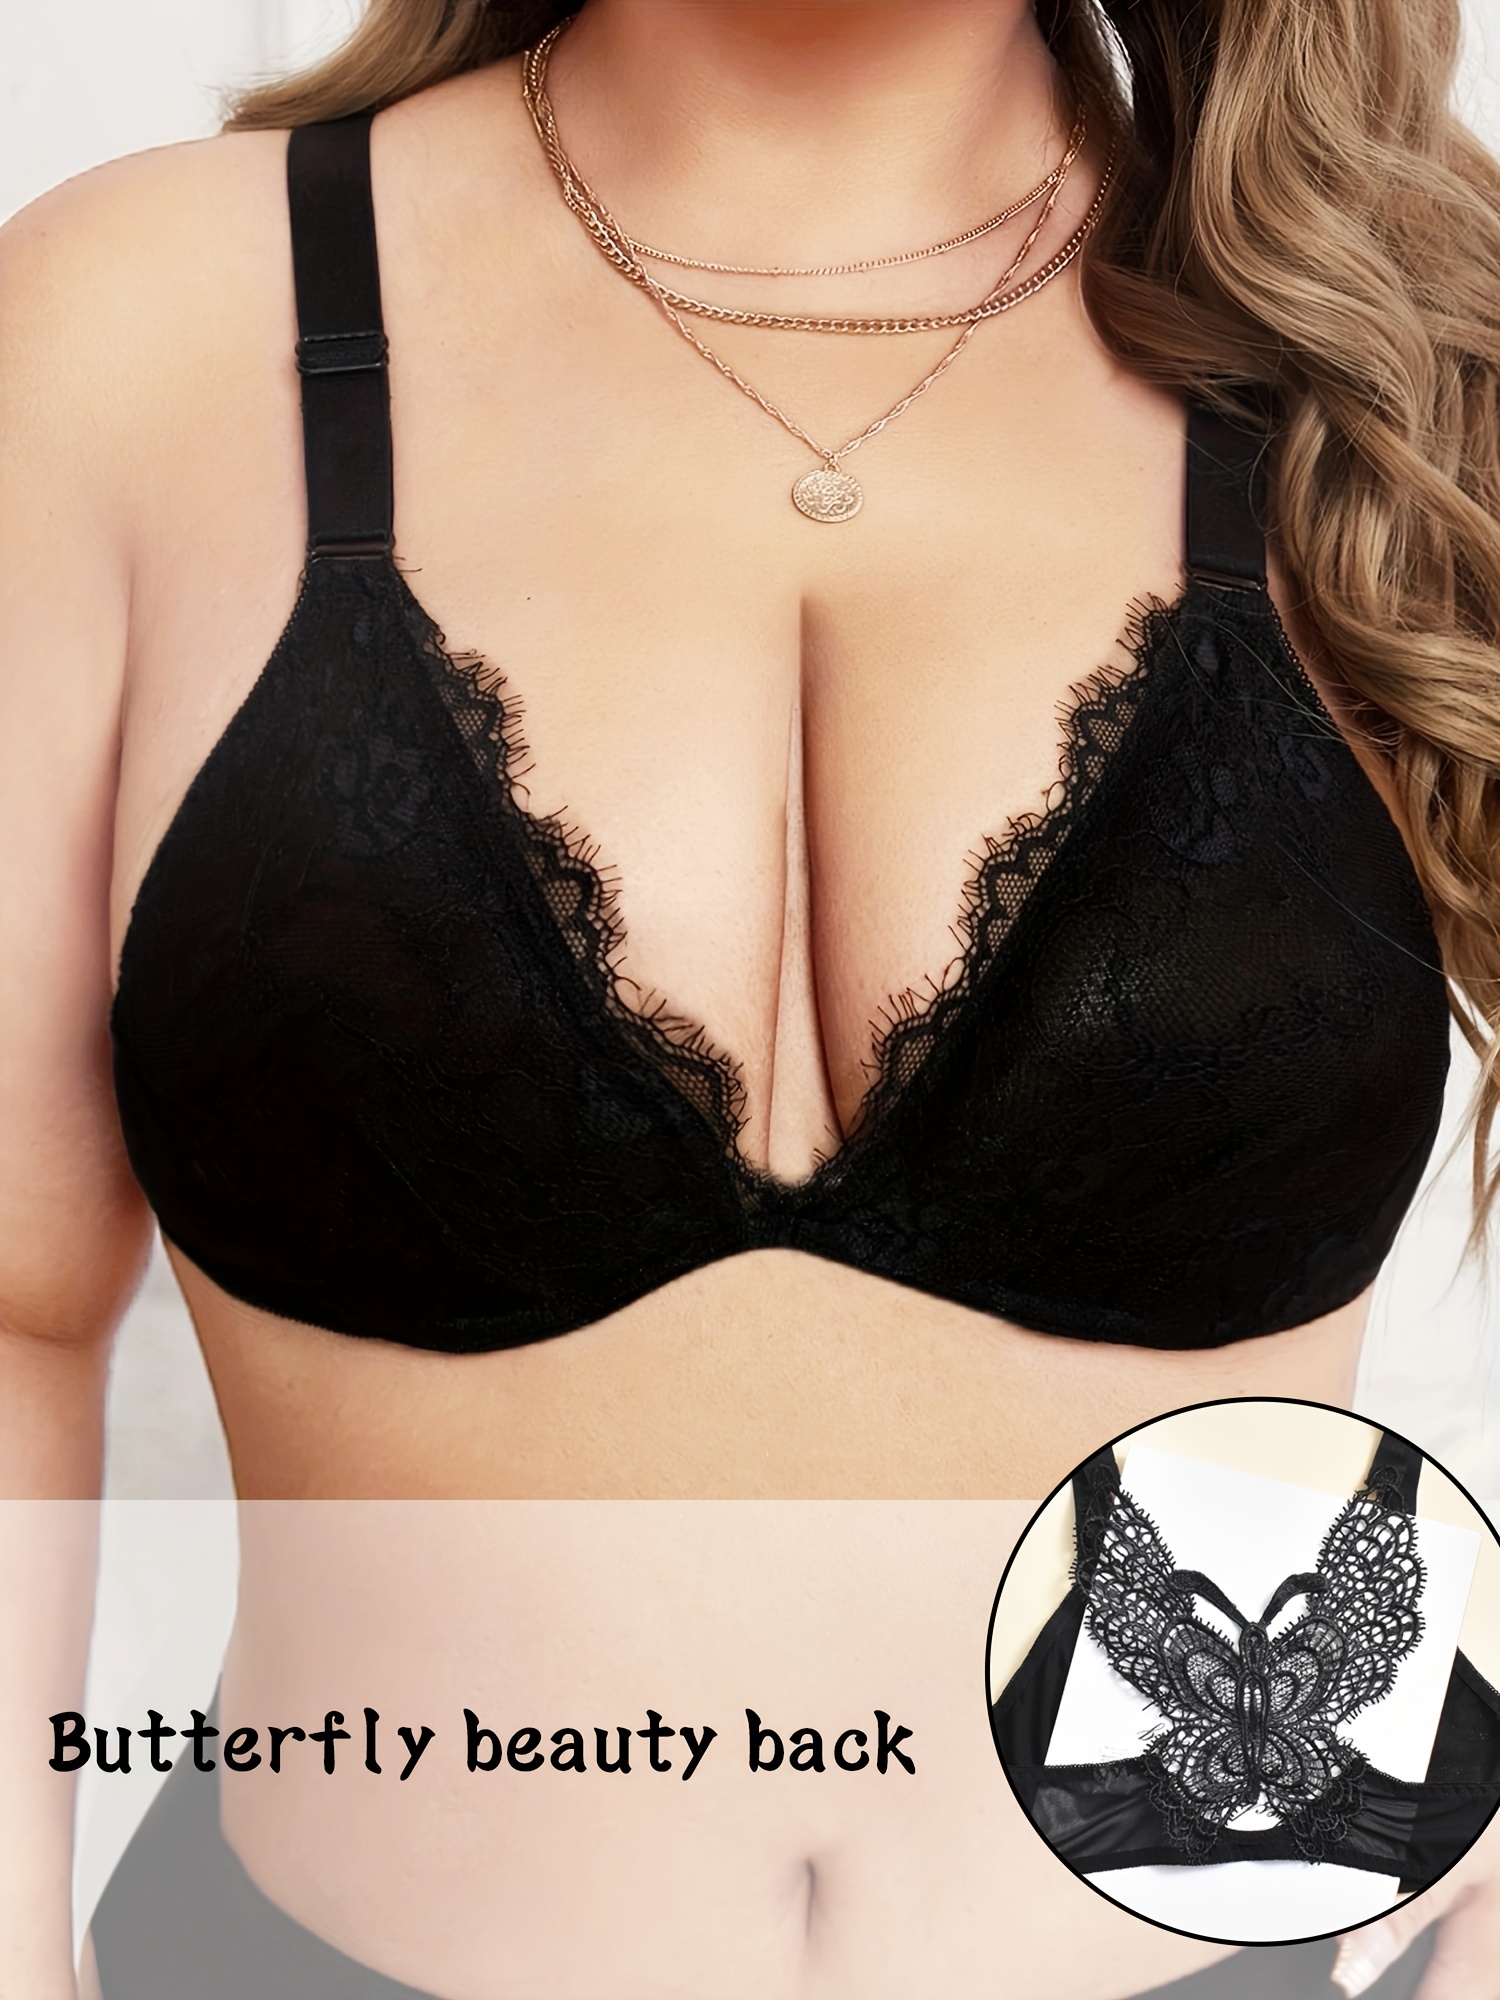 Women's Wire-free Push Up Bra Fashion Sexy Lace Butterfly Beauty